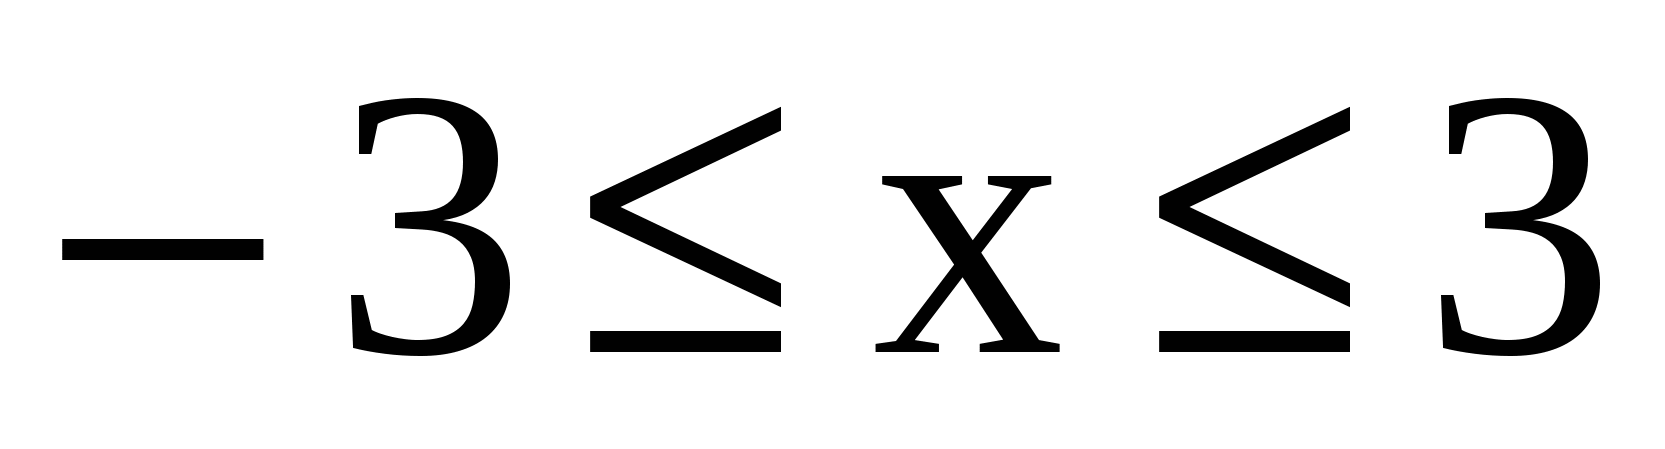 Функции y=x2 и y=x3 и их графики